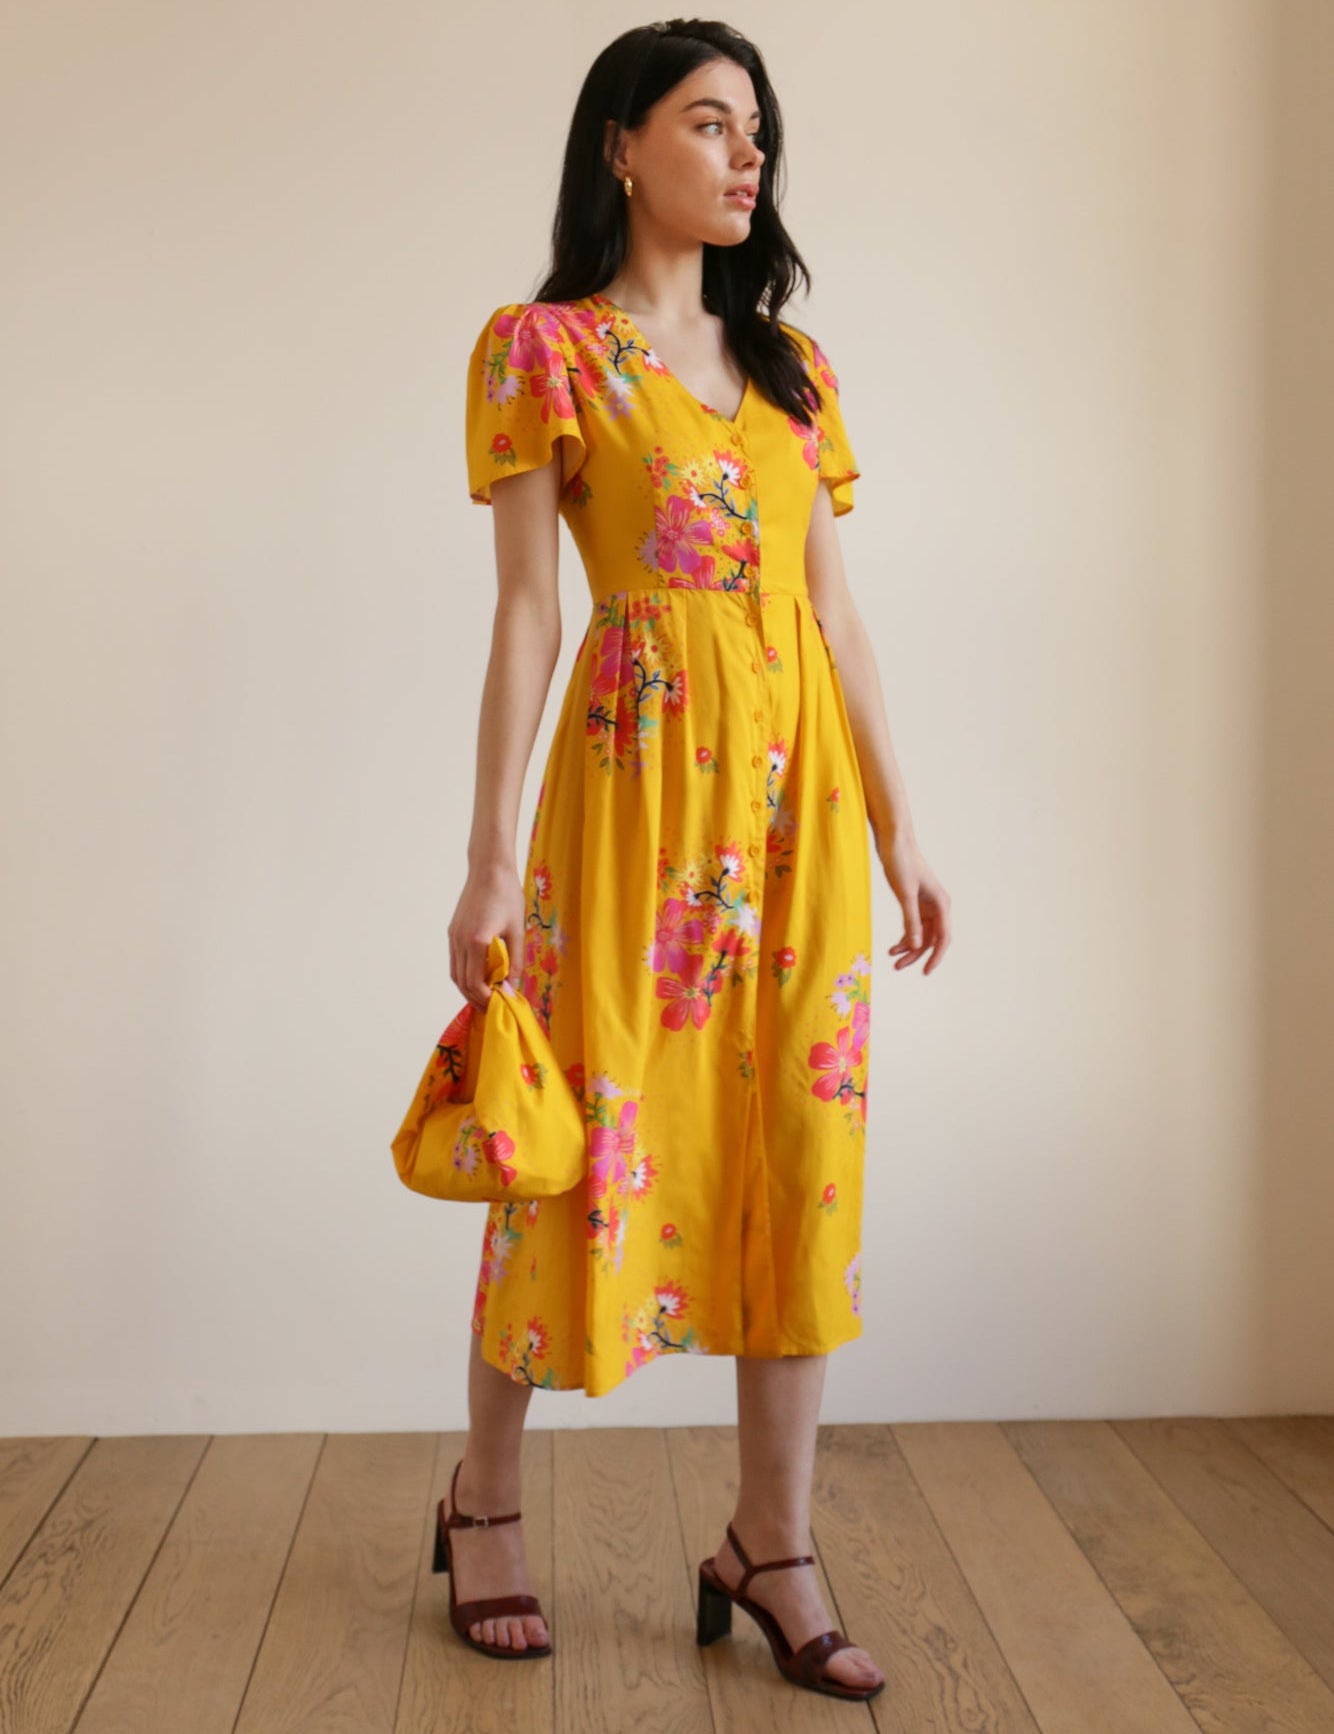 deidei-maya-midi-dress-in-yellow-floral-print0161copy-2.jpg